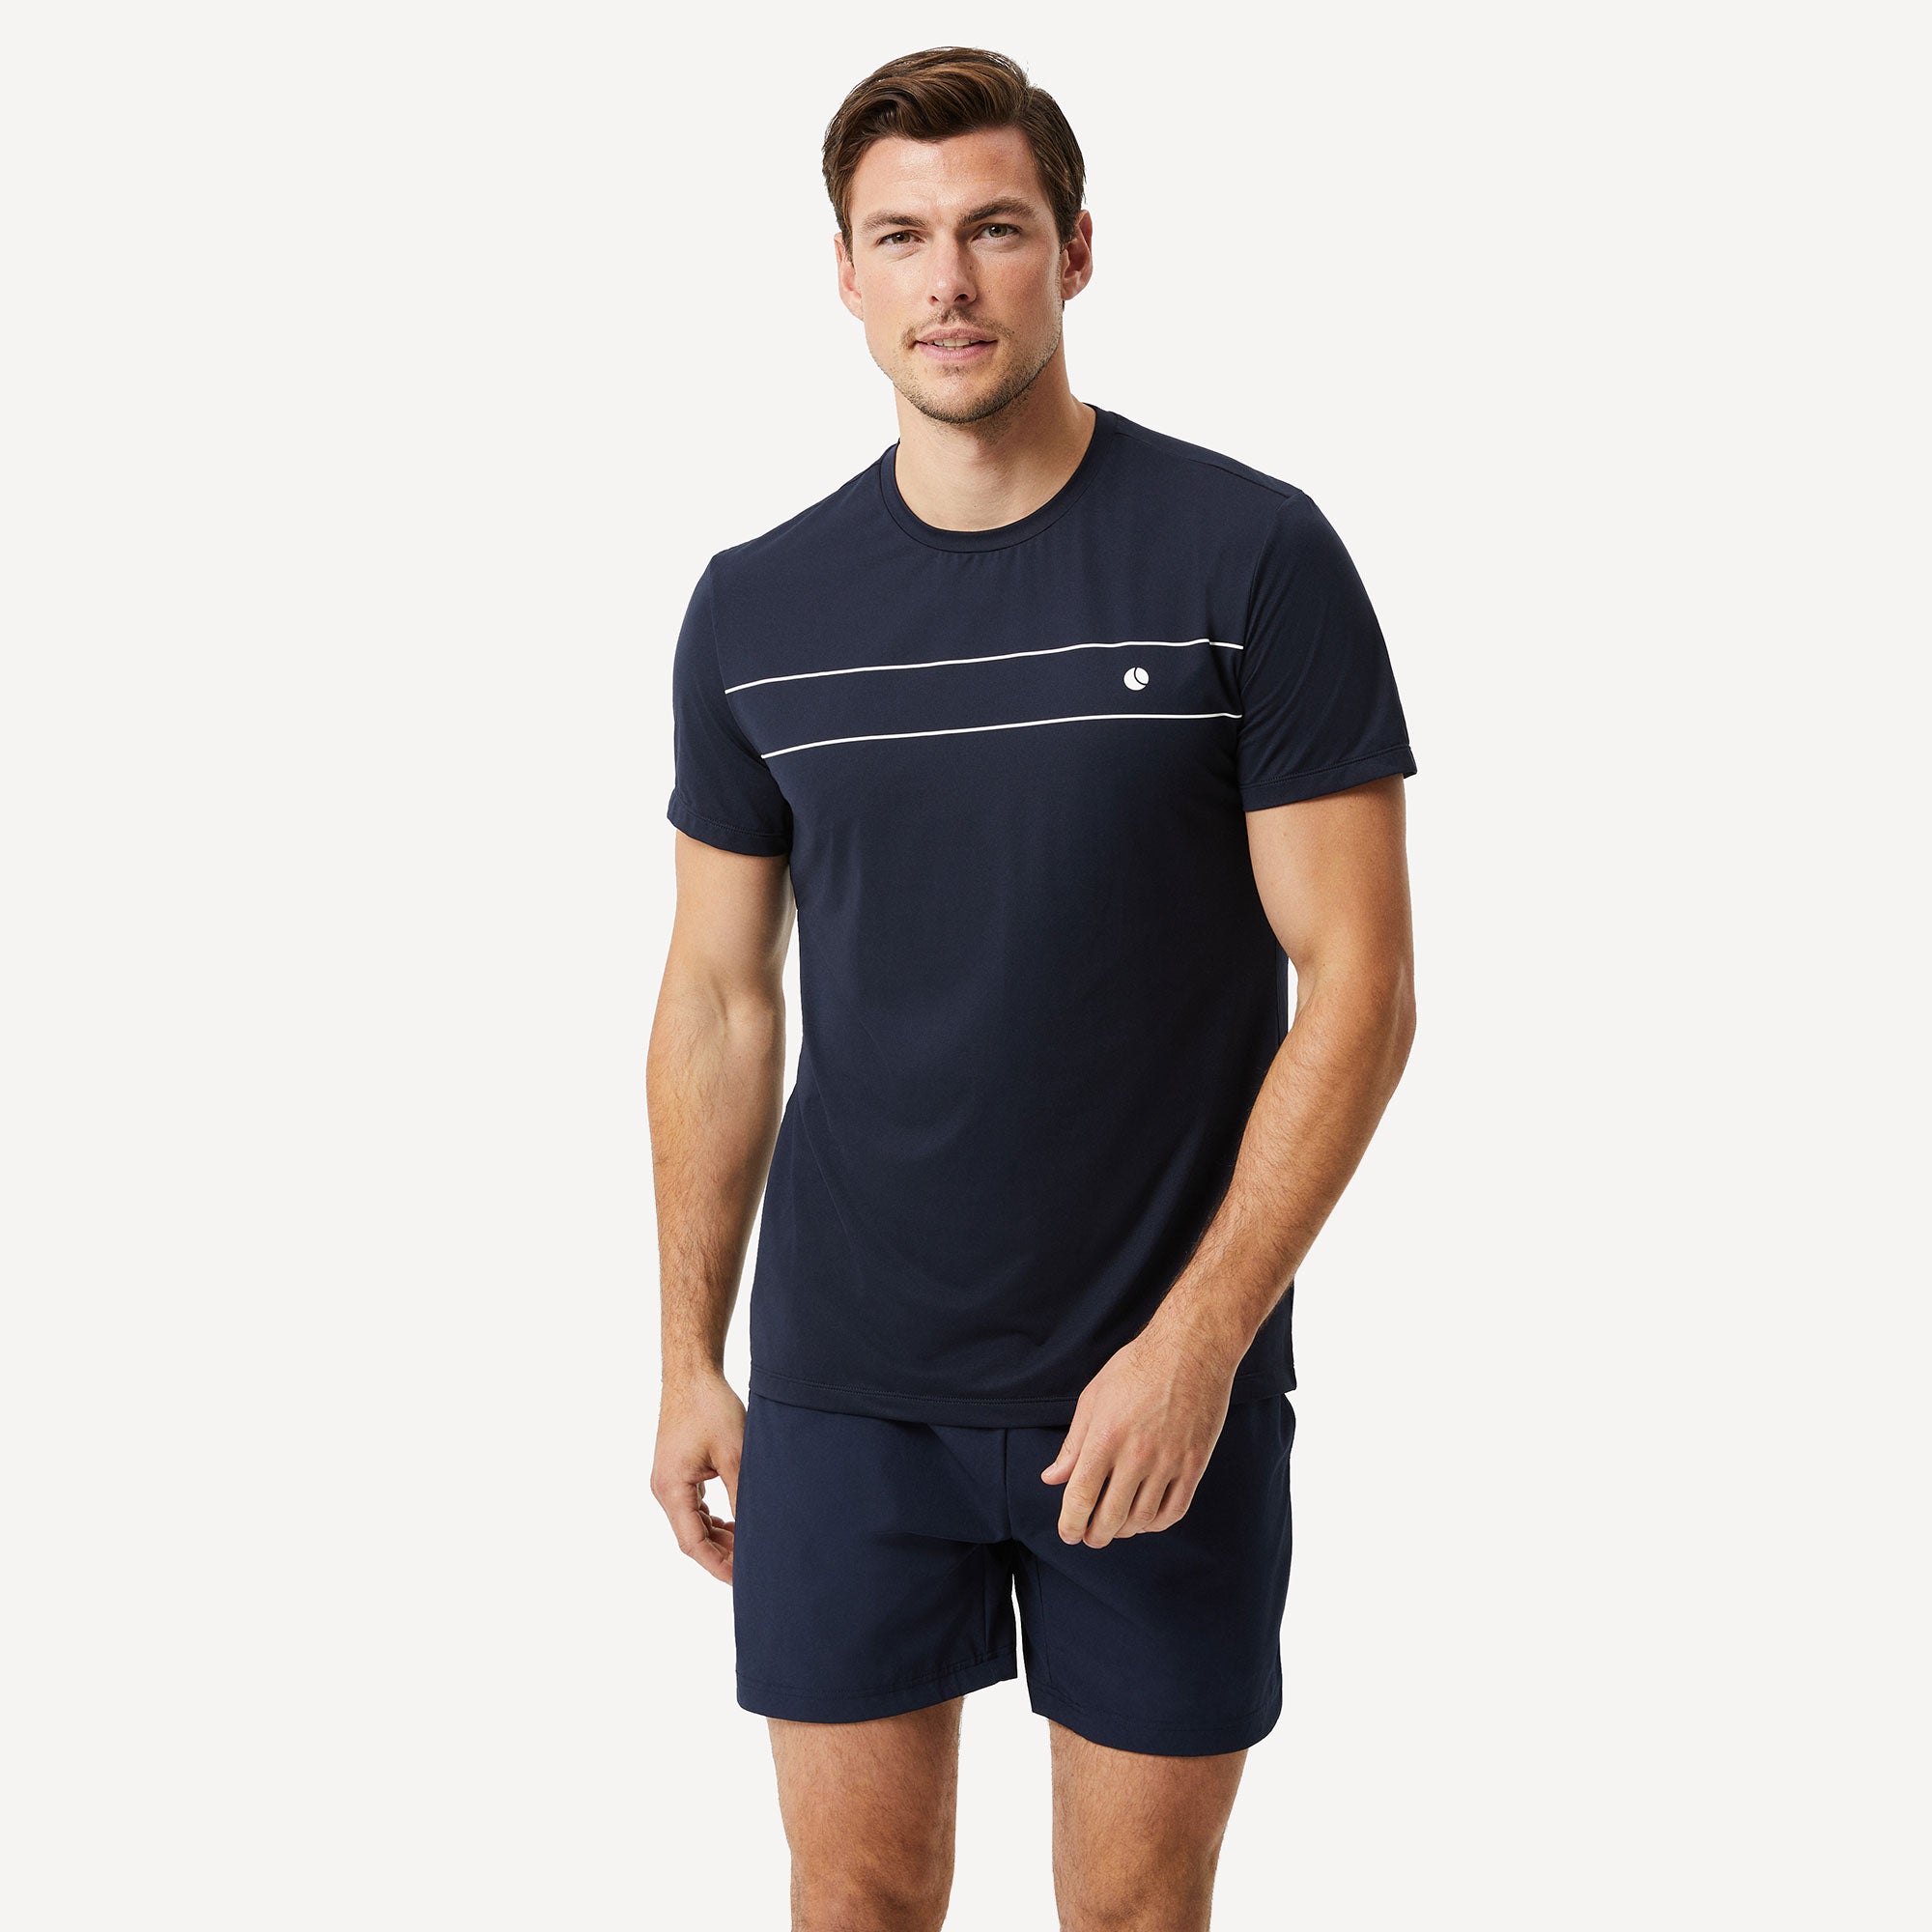 Björn Borg Ace Men's Light Tennis Shirt - Dark Blue (1)